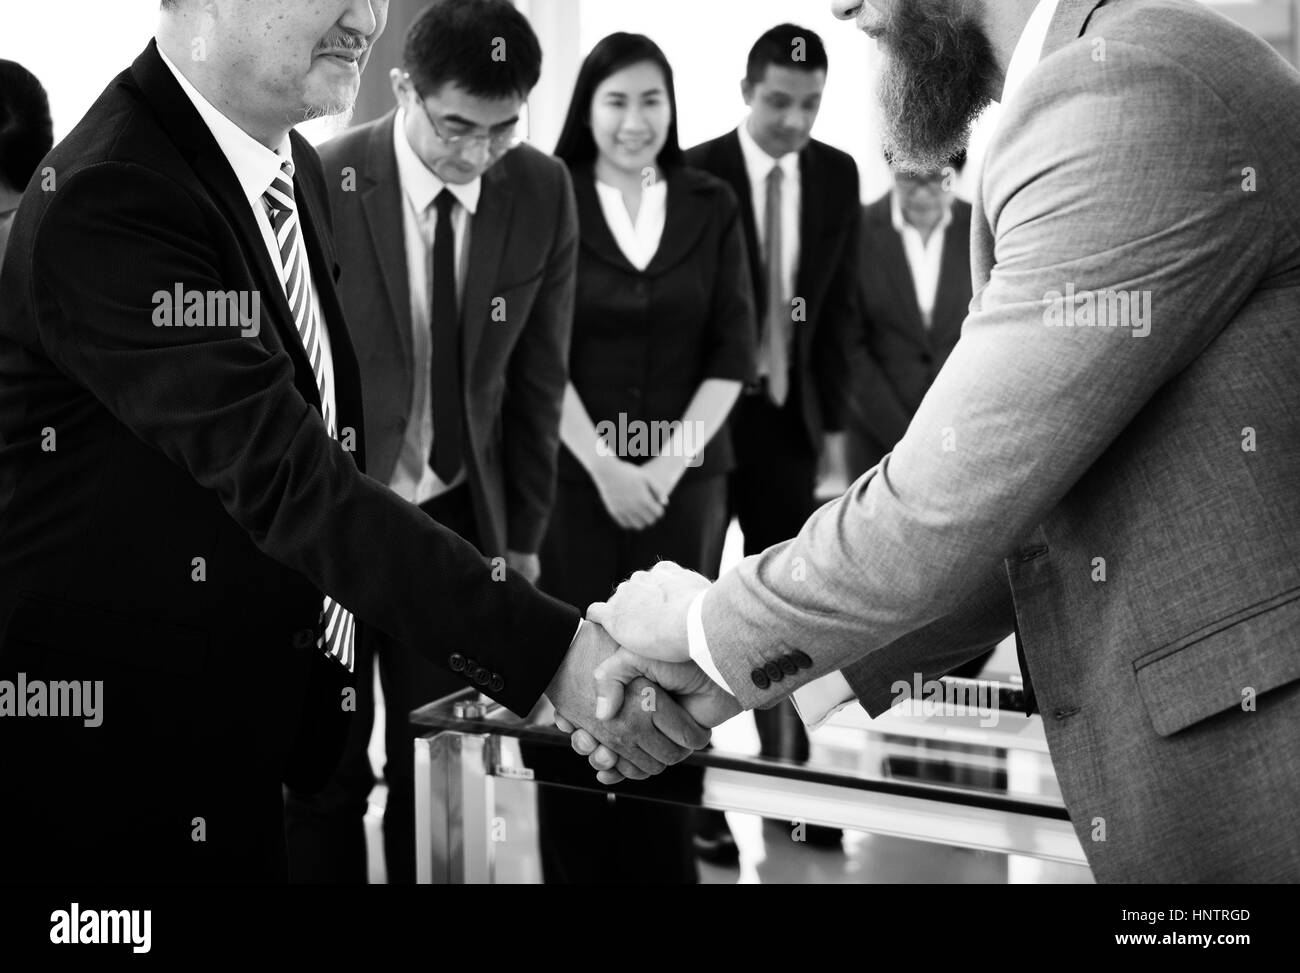 Business Partners Introductionary Handshake Bow Stock Photo